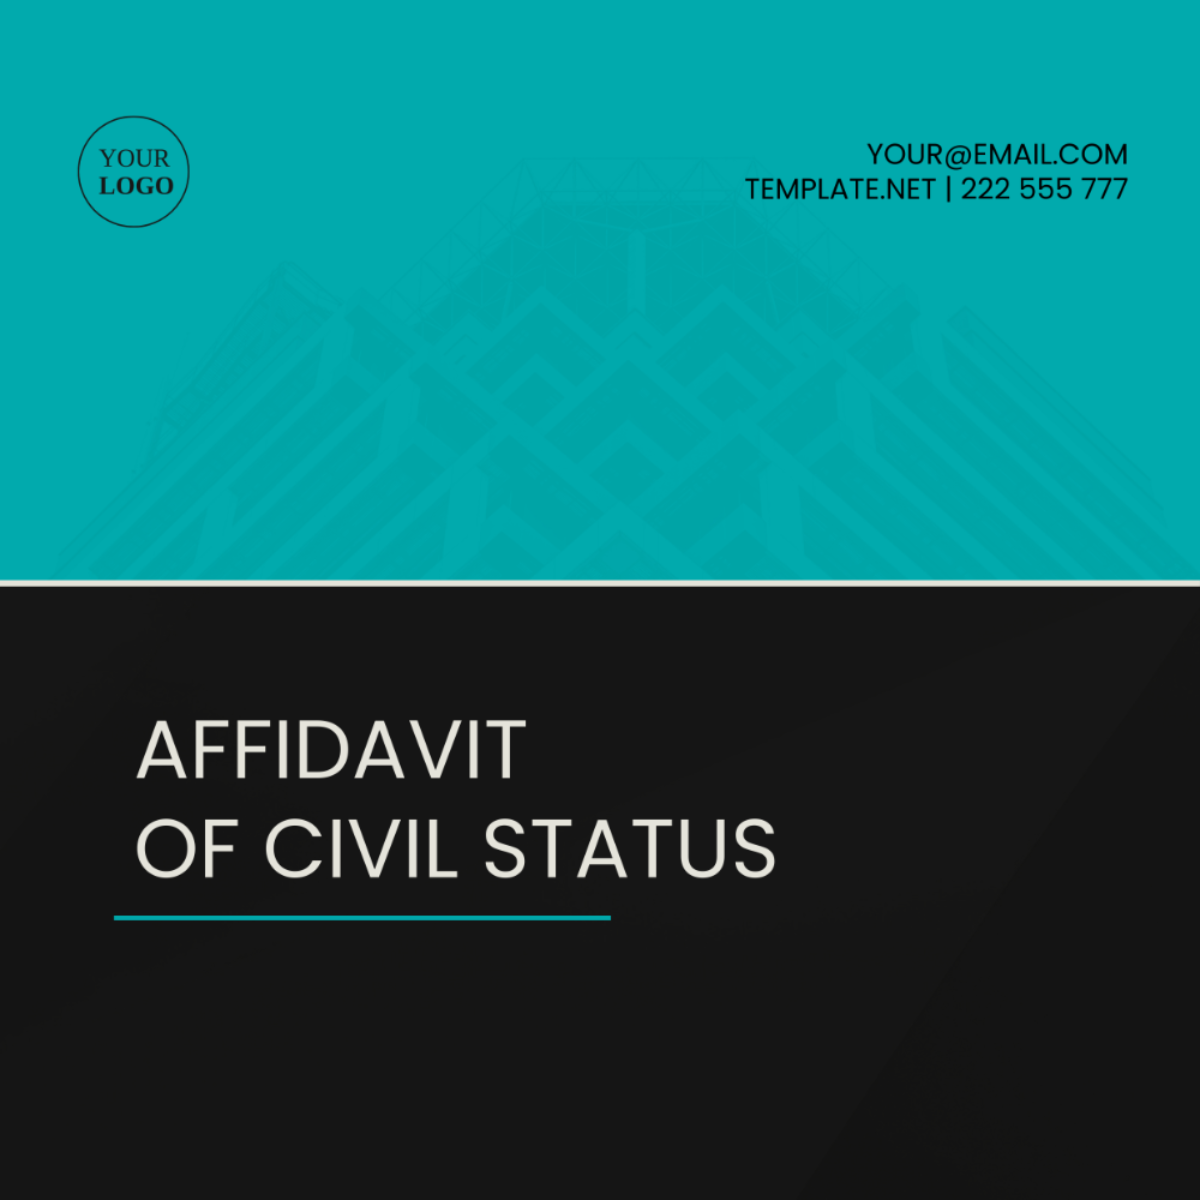 Affidavit of Civil Status Template